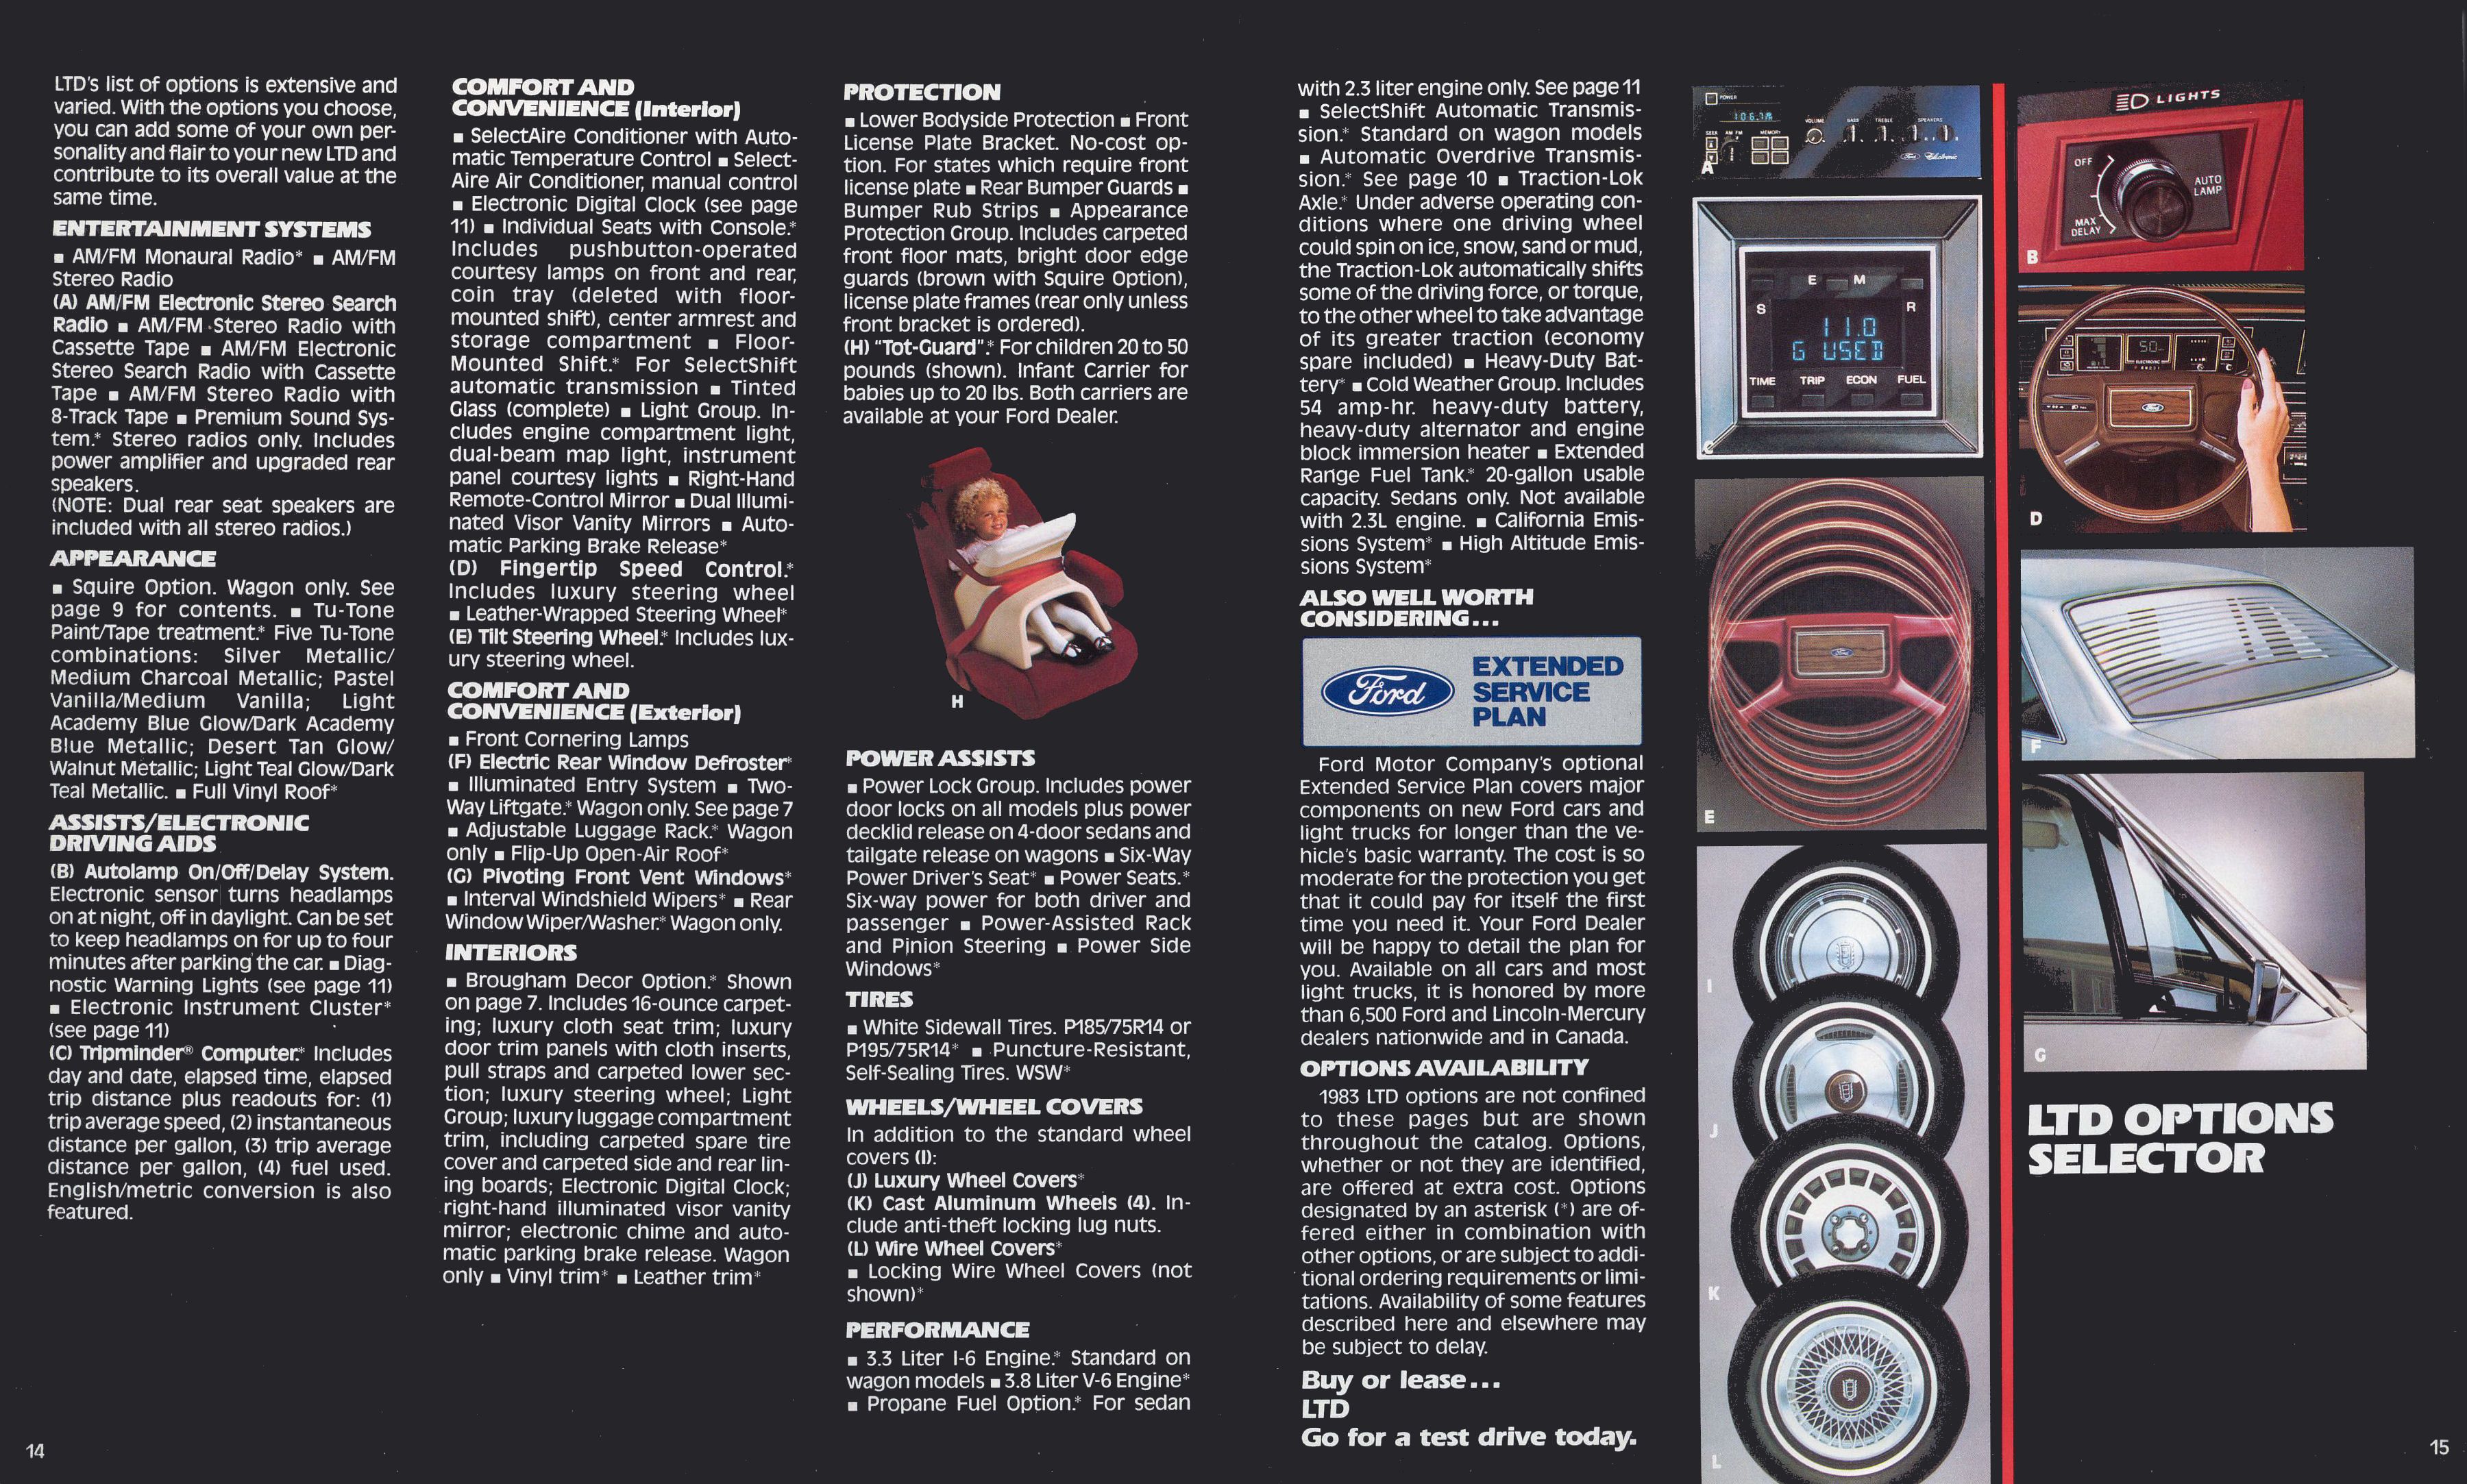 1983 Ford LTD Brochure Page 1